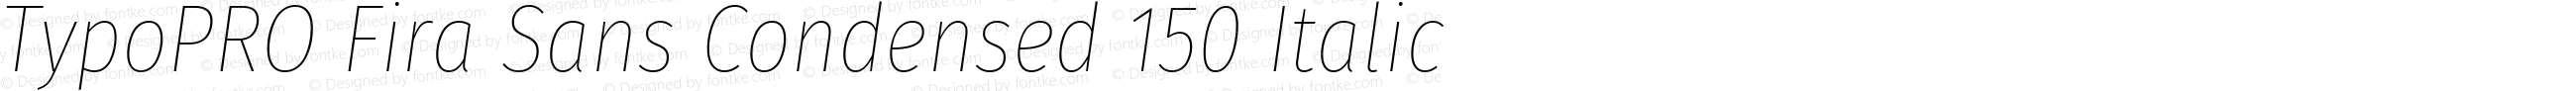 TypoPRO Fira Sans Condensed Thin Italic